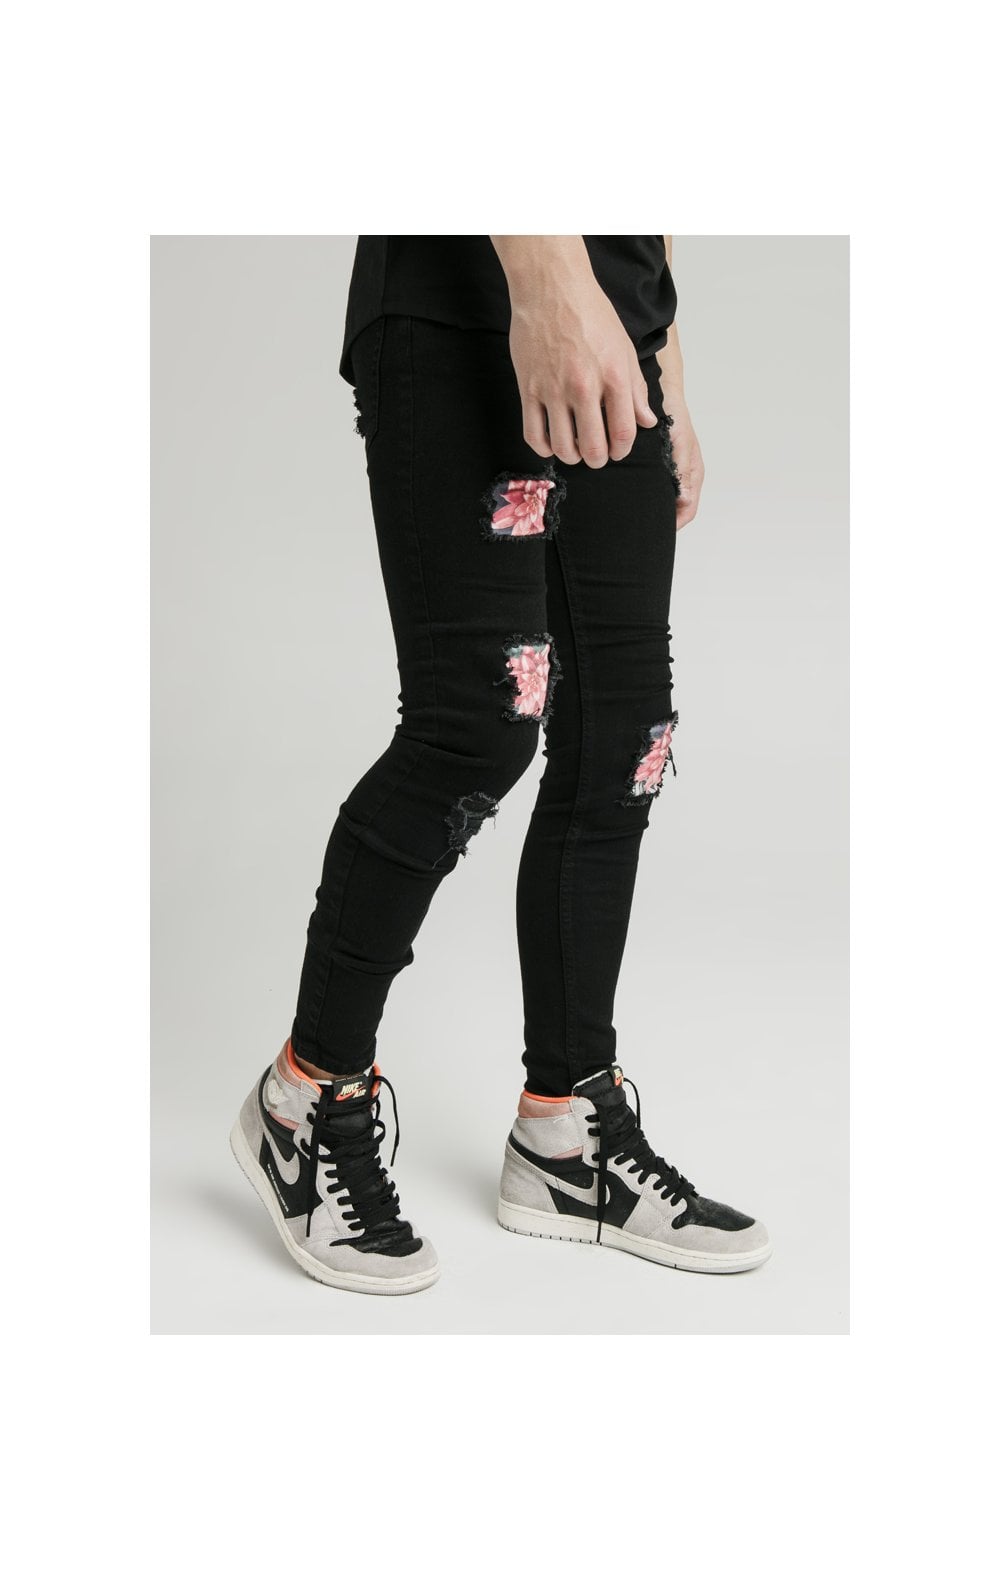 Illusive London Distressed Floral Patch Jeans - Black & Floral (1)